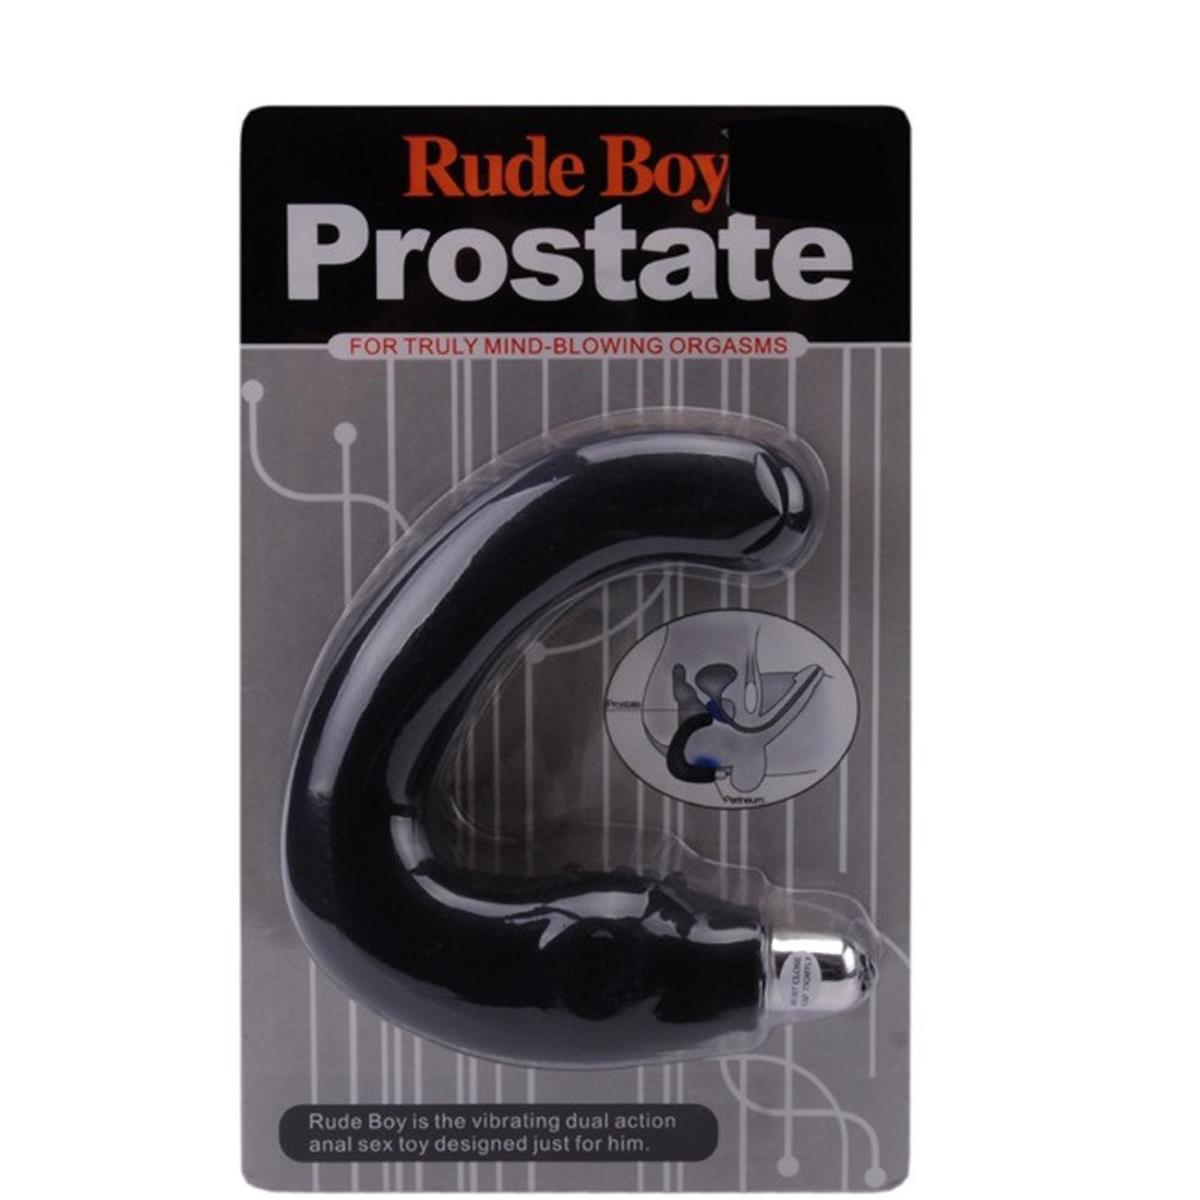 Rude Boy Prostate Vibrador K Import & Export